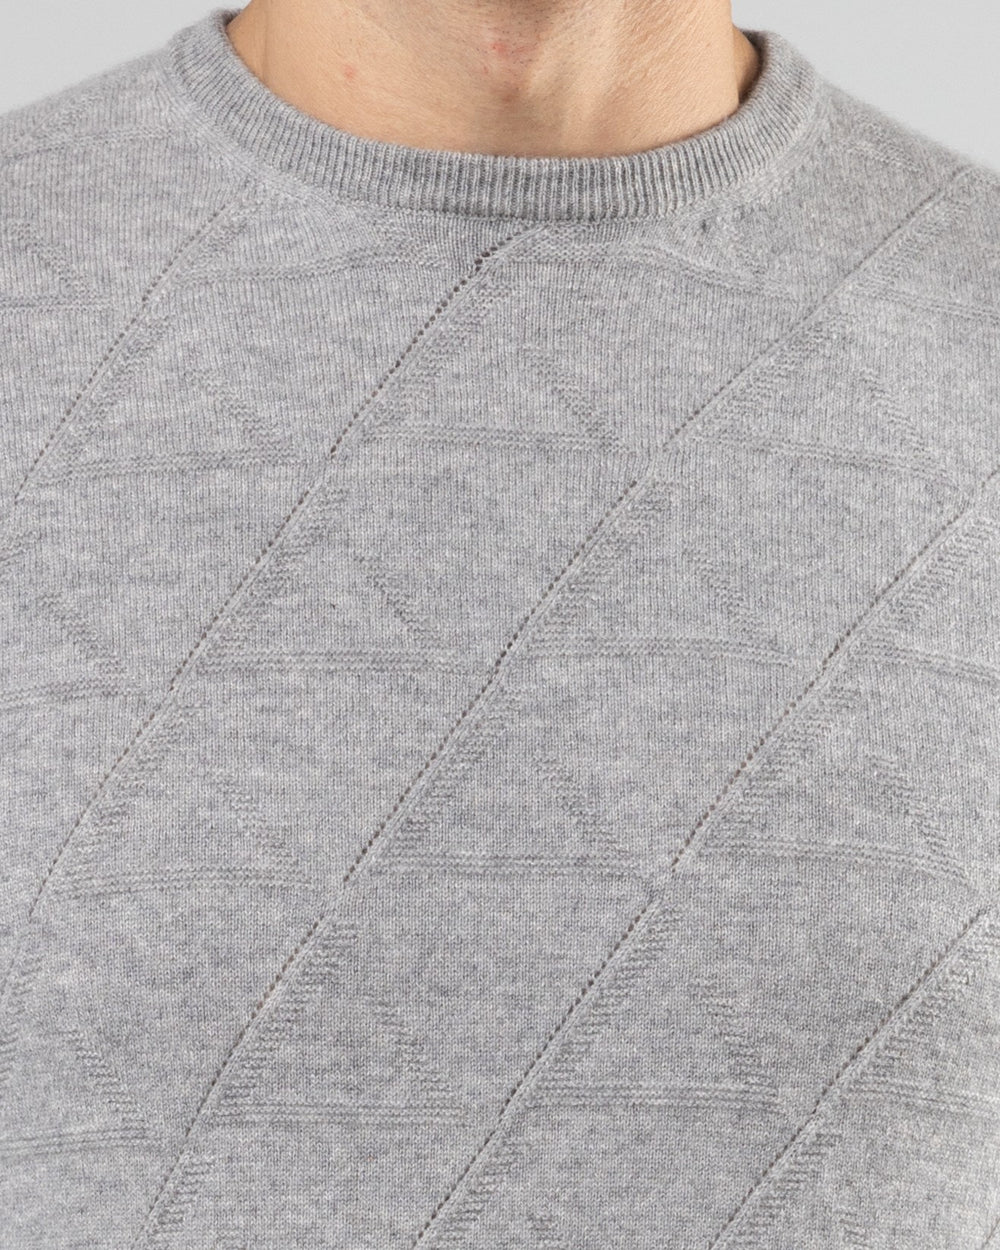 Sleet Sweater in Cashmere, Pearl Grey